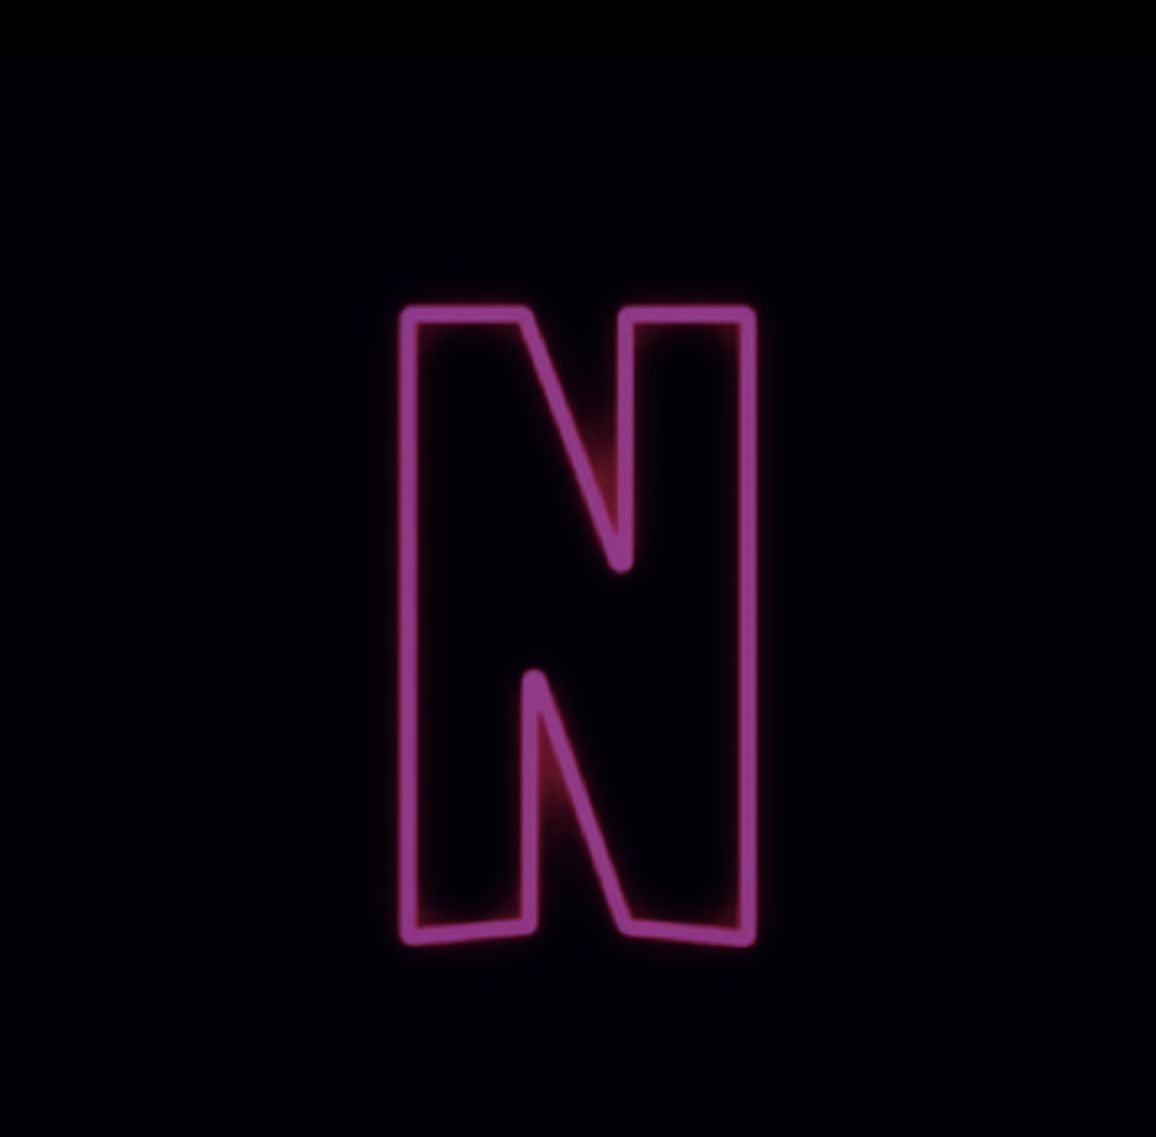 Neon Pink Netflix Icon. iPhone wallpaper tumblr aesthetic, Neon pink, Neon